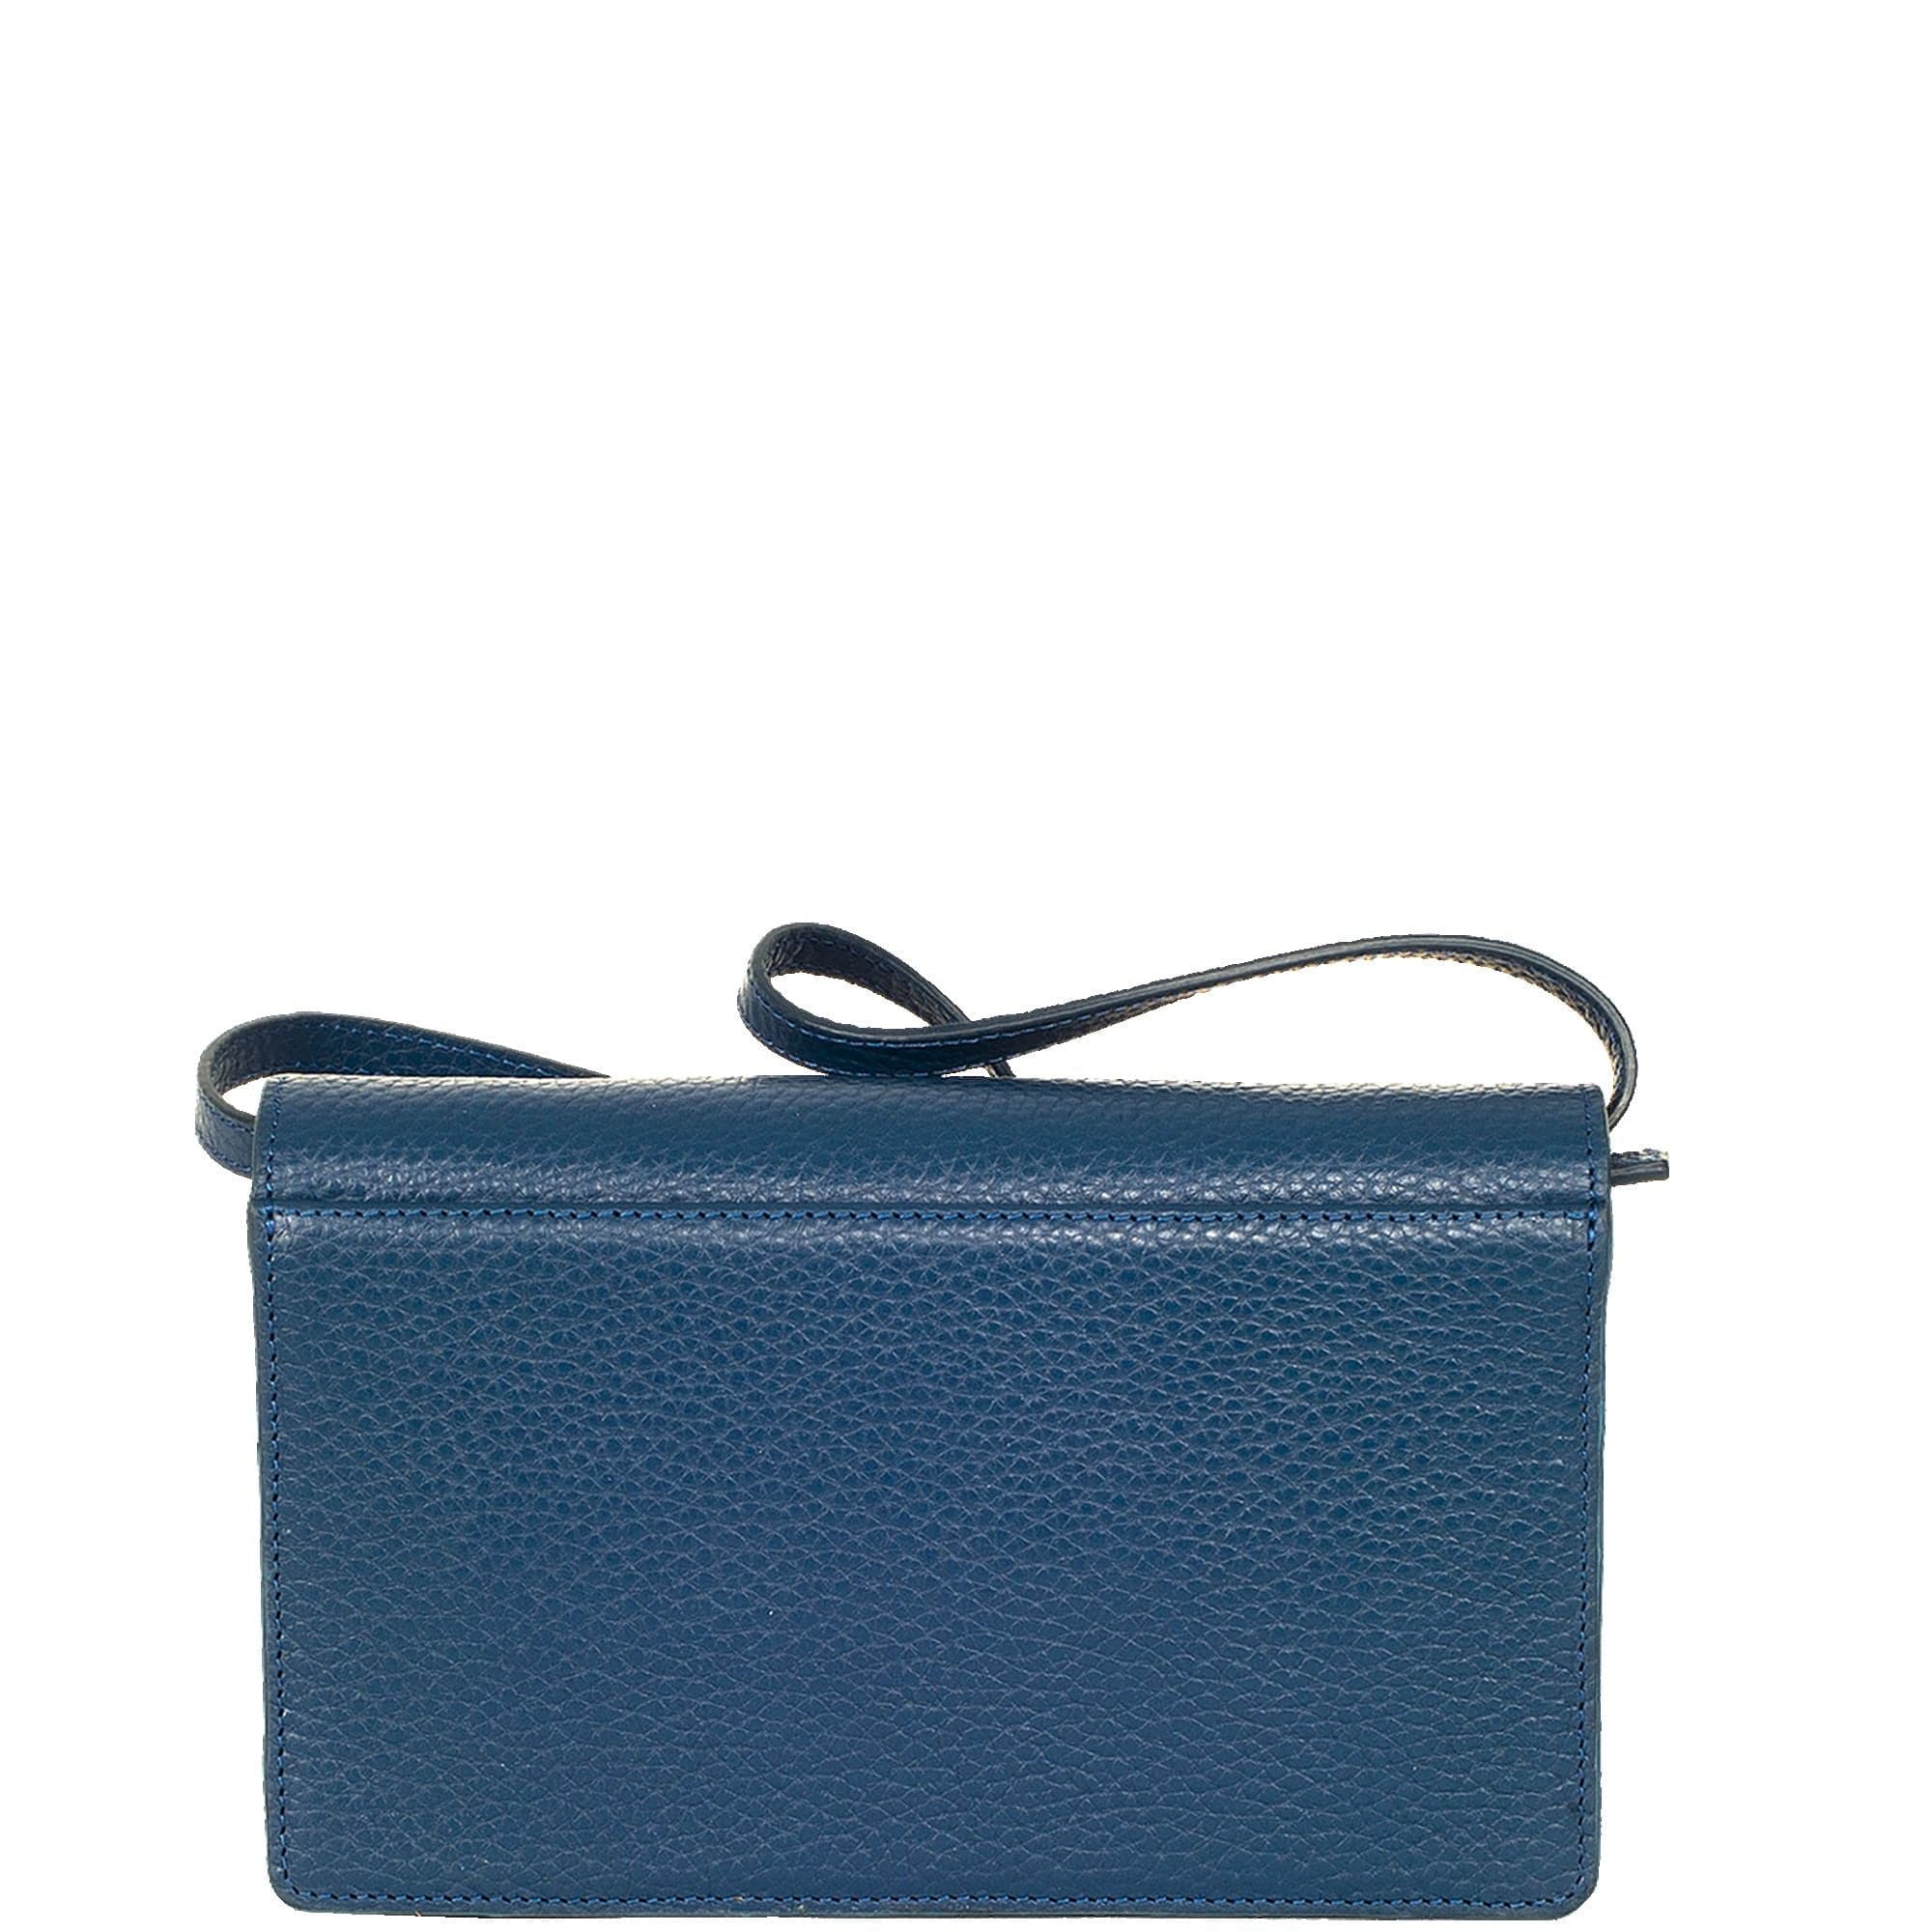 Handtasche Clutch Leder hellblau